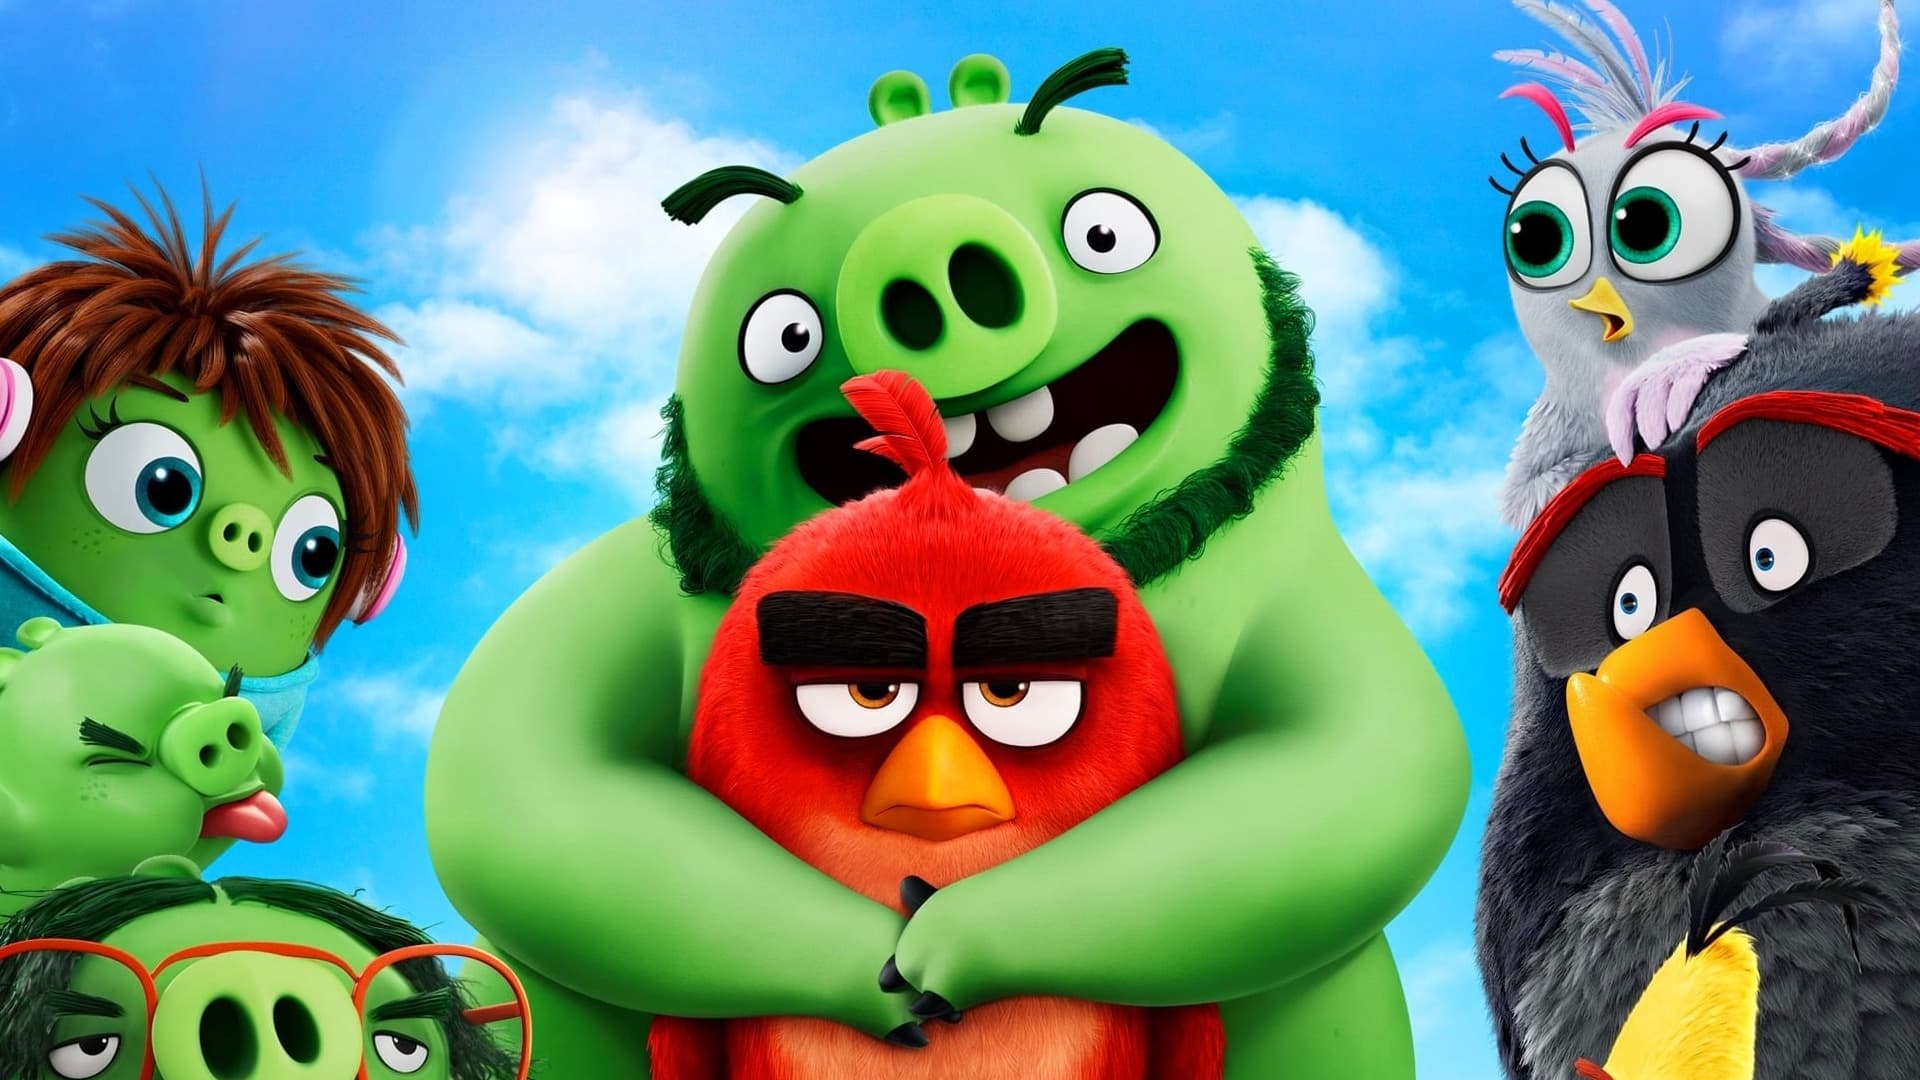 Image du film Angry Birds : copains comme cochons lf36zgkw4y2pzc2bktsbuz6izzxjpg